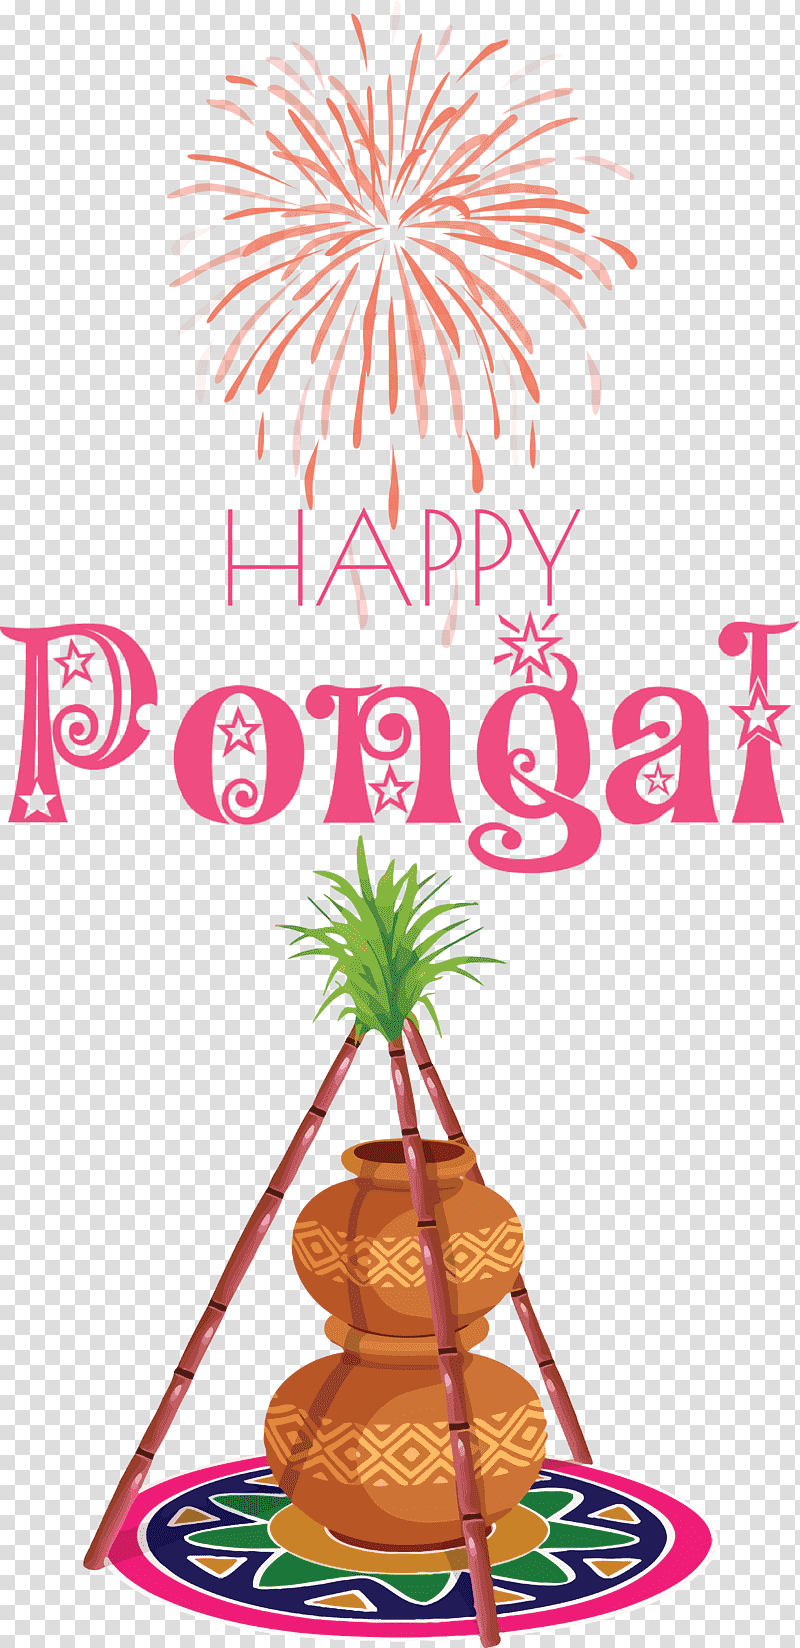 Pongal Happy Pongal, Indian Cuisine, Makar Sankranti, Bhogi, Tamil Cuisine, Mattu Pongal, Harvest Festival transparent background PNG clipart